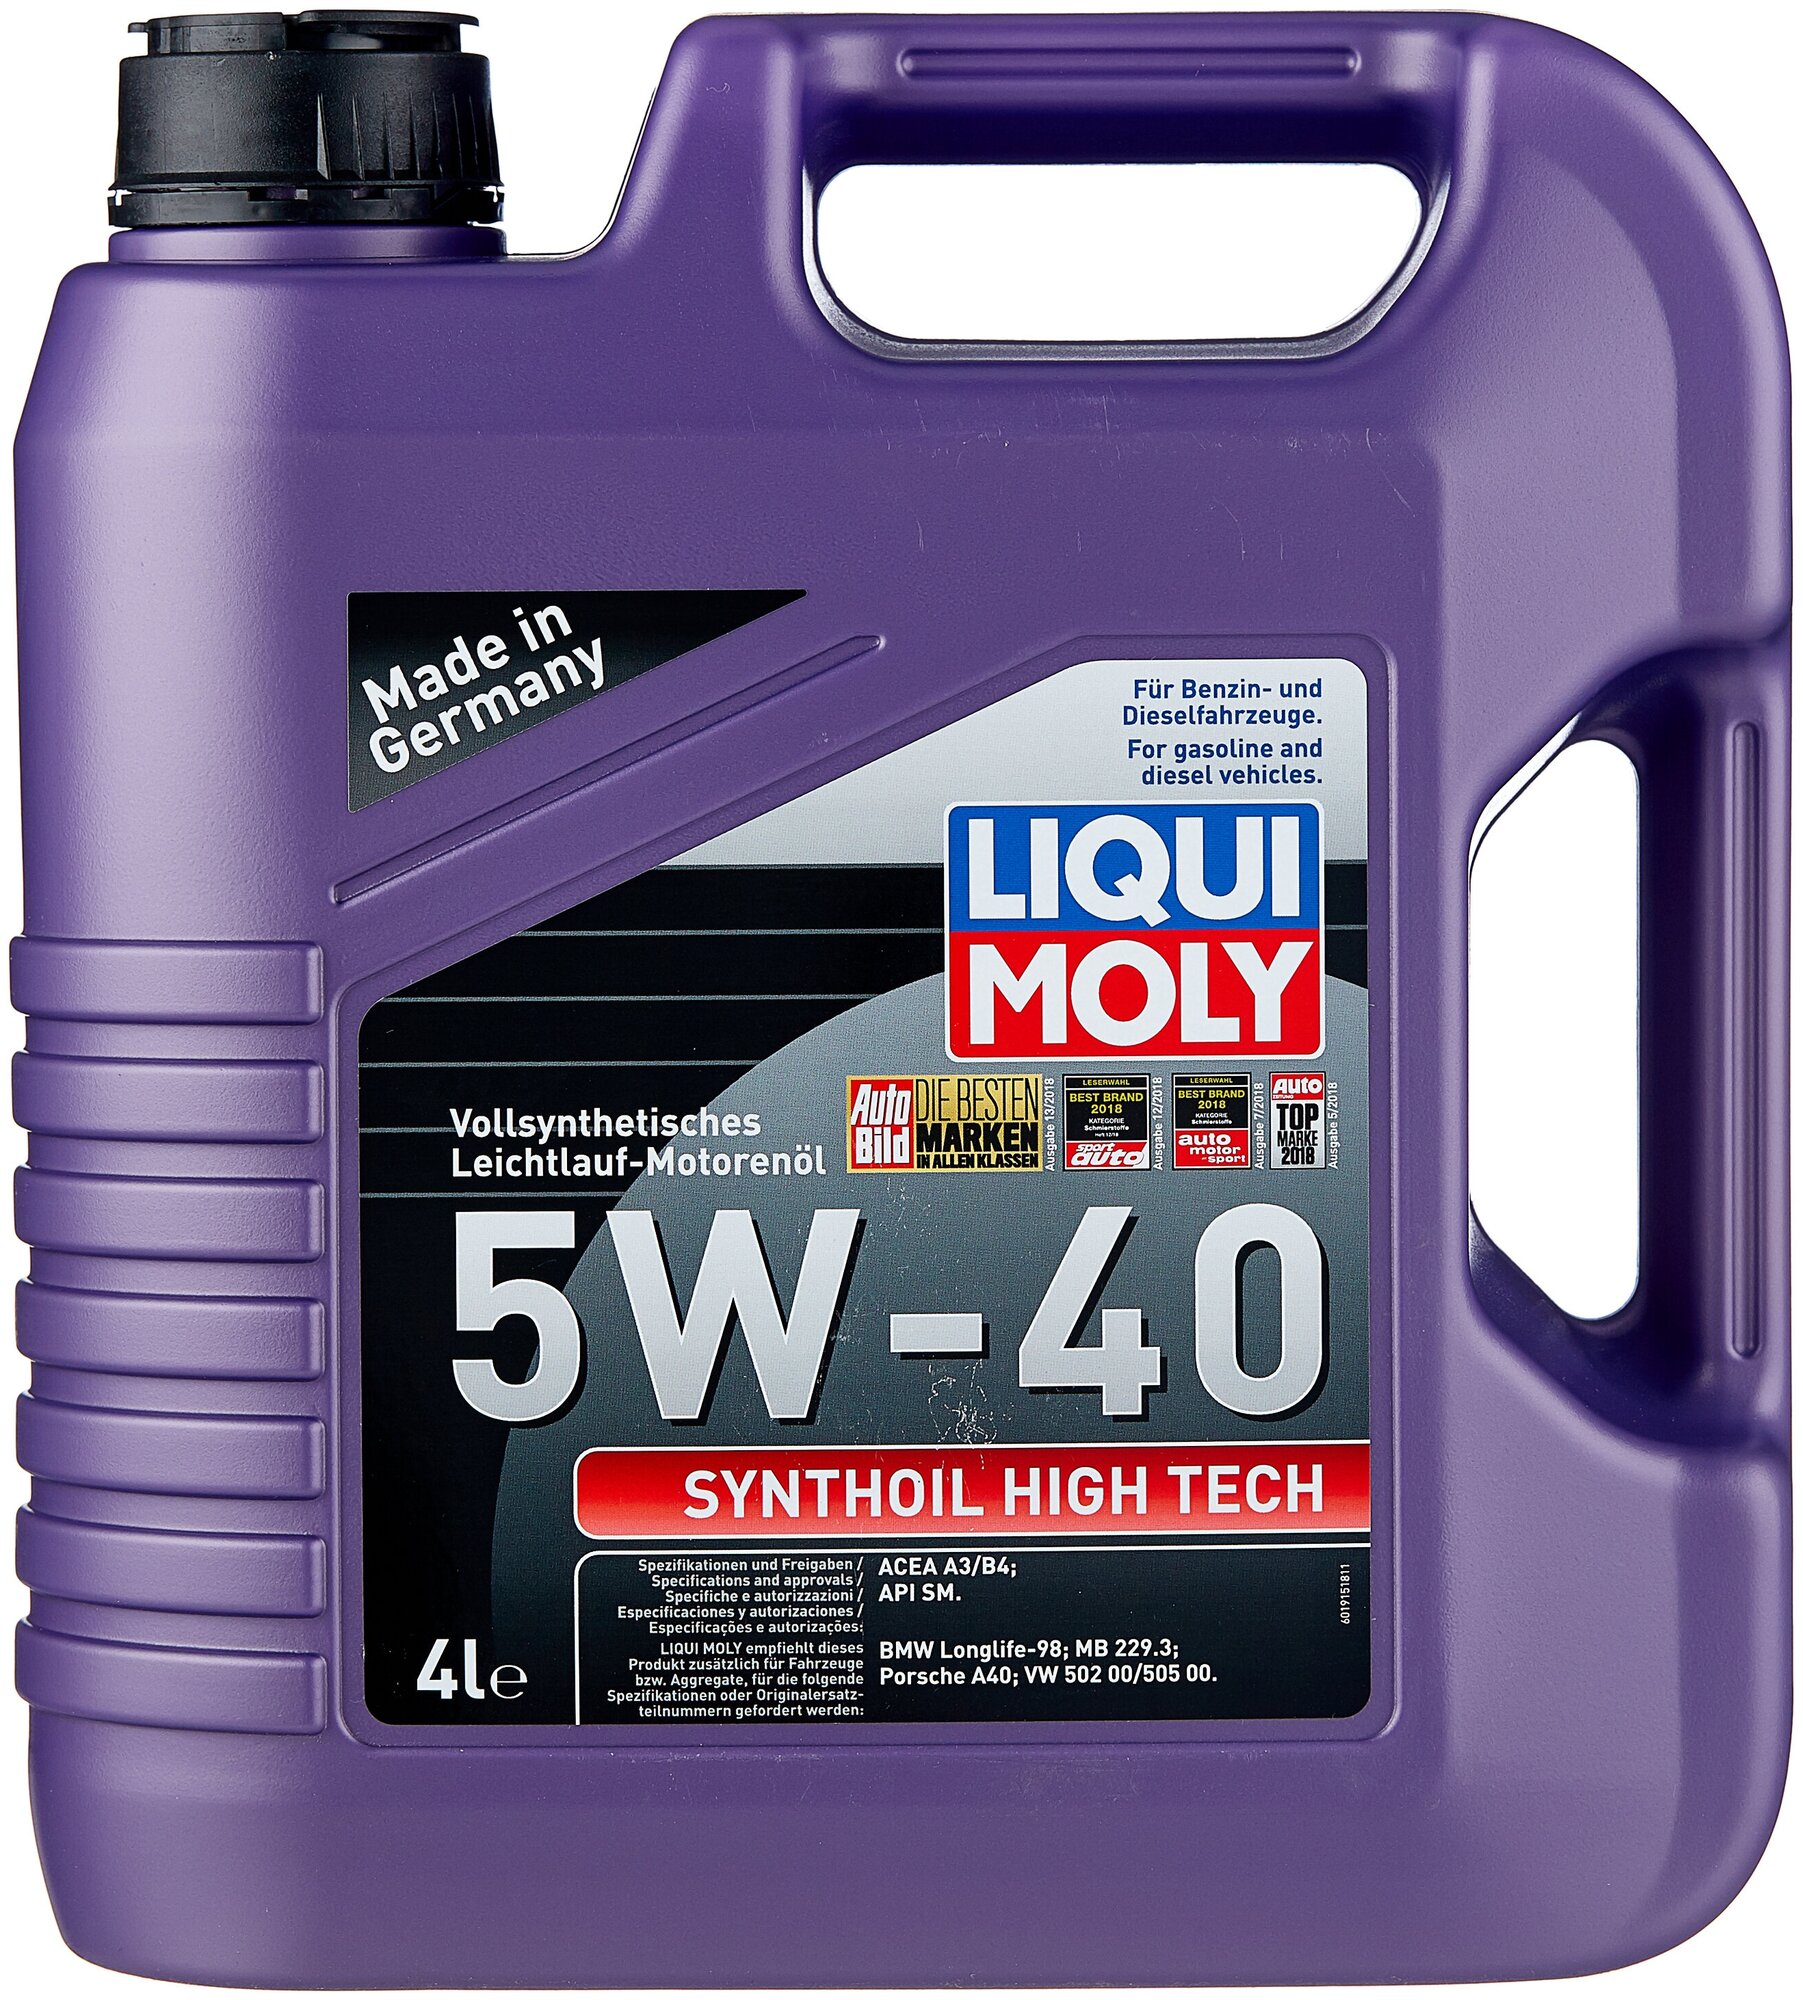    LIQUI MOLY Synthoil High Tech 5W-40, 4 